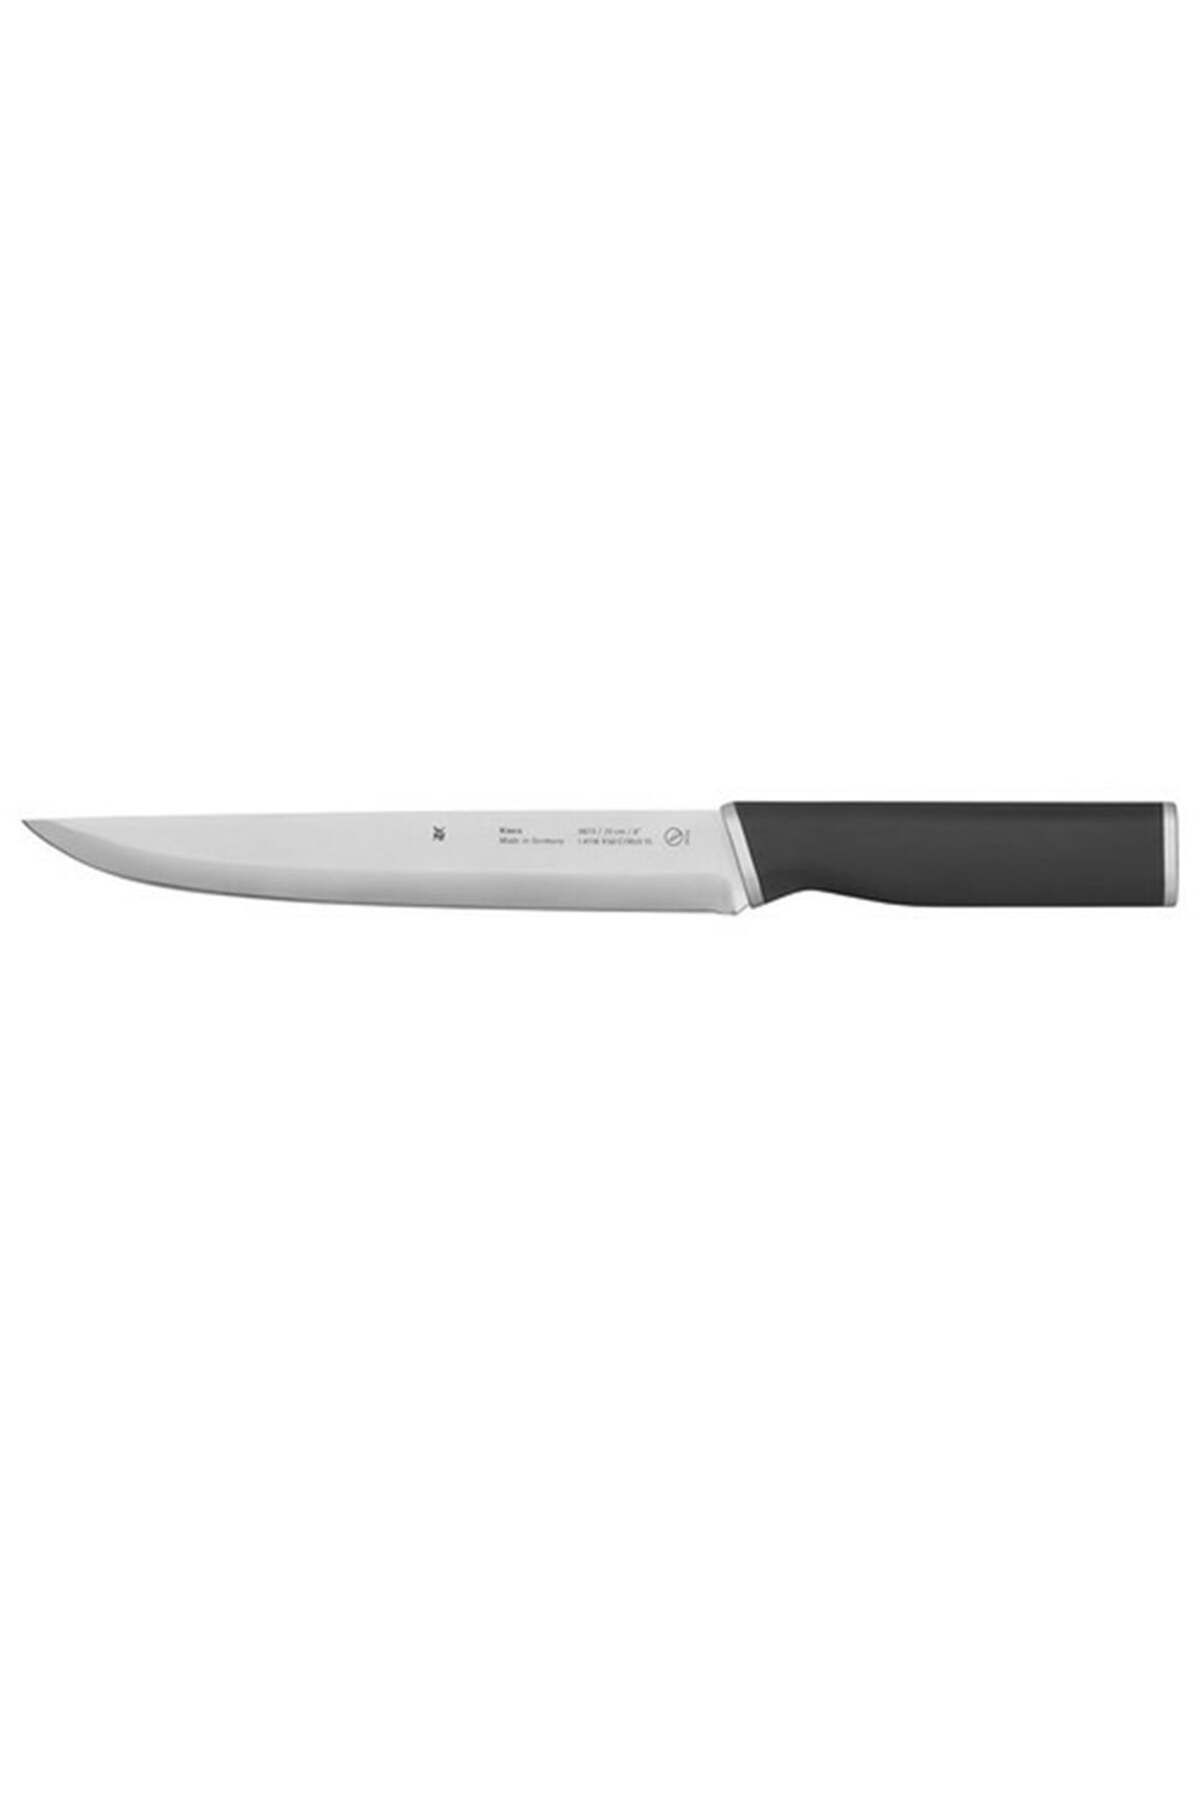 Wmf Kineo Et Bıçağı 20 Cm